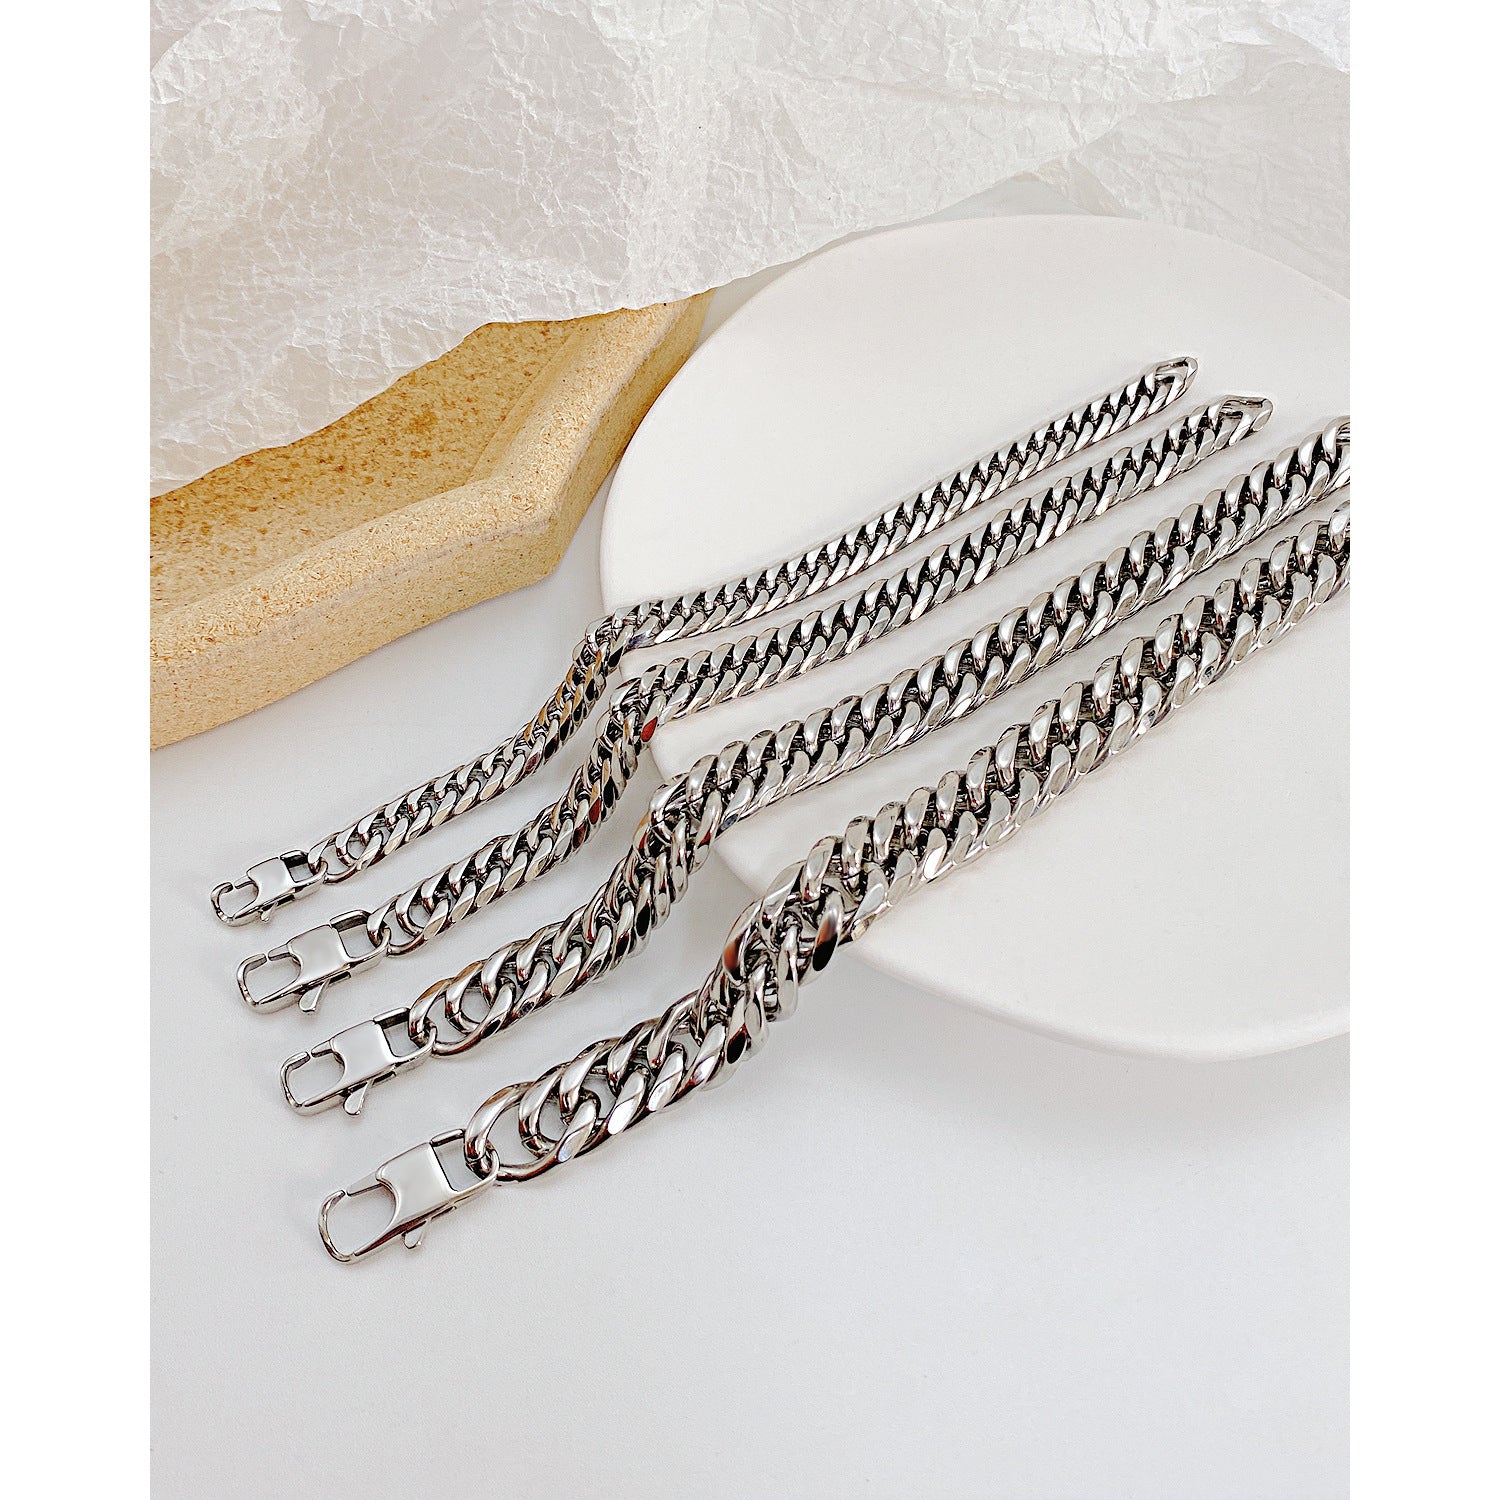 Titanium Stainless Steel Cuban Link Chain Bracelet 8-14mm